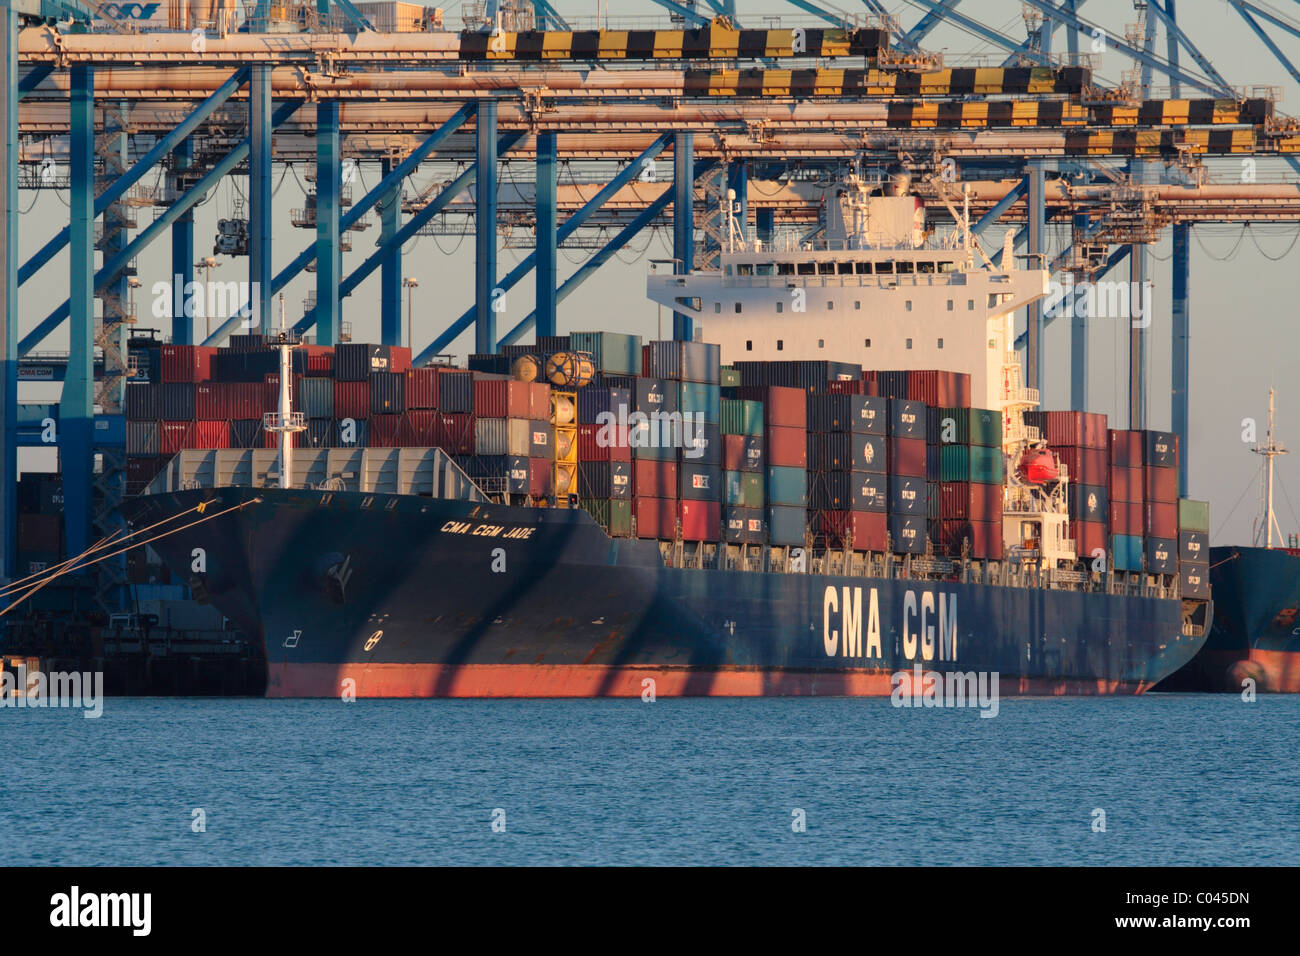 International trade via sea transport. The container ship CMA CGM Jade at Malta Freeport Stock Photo